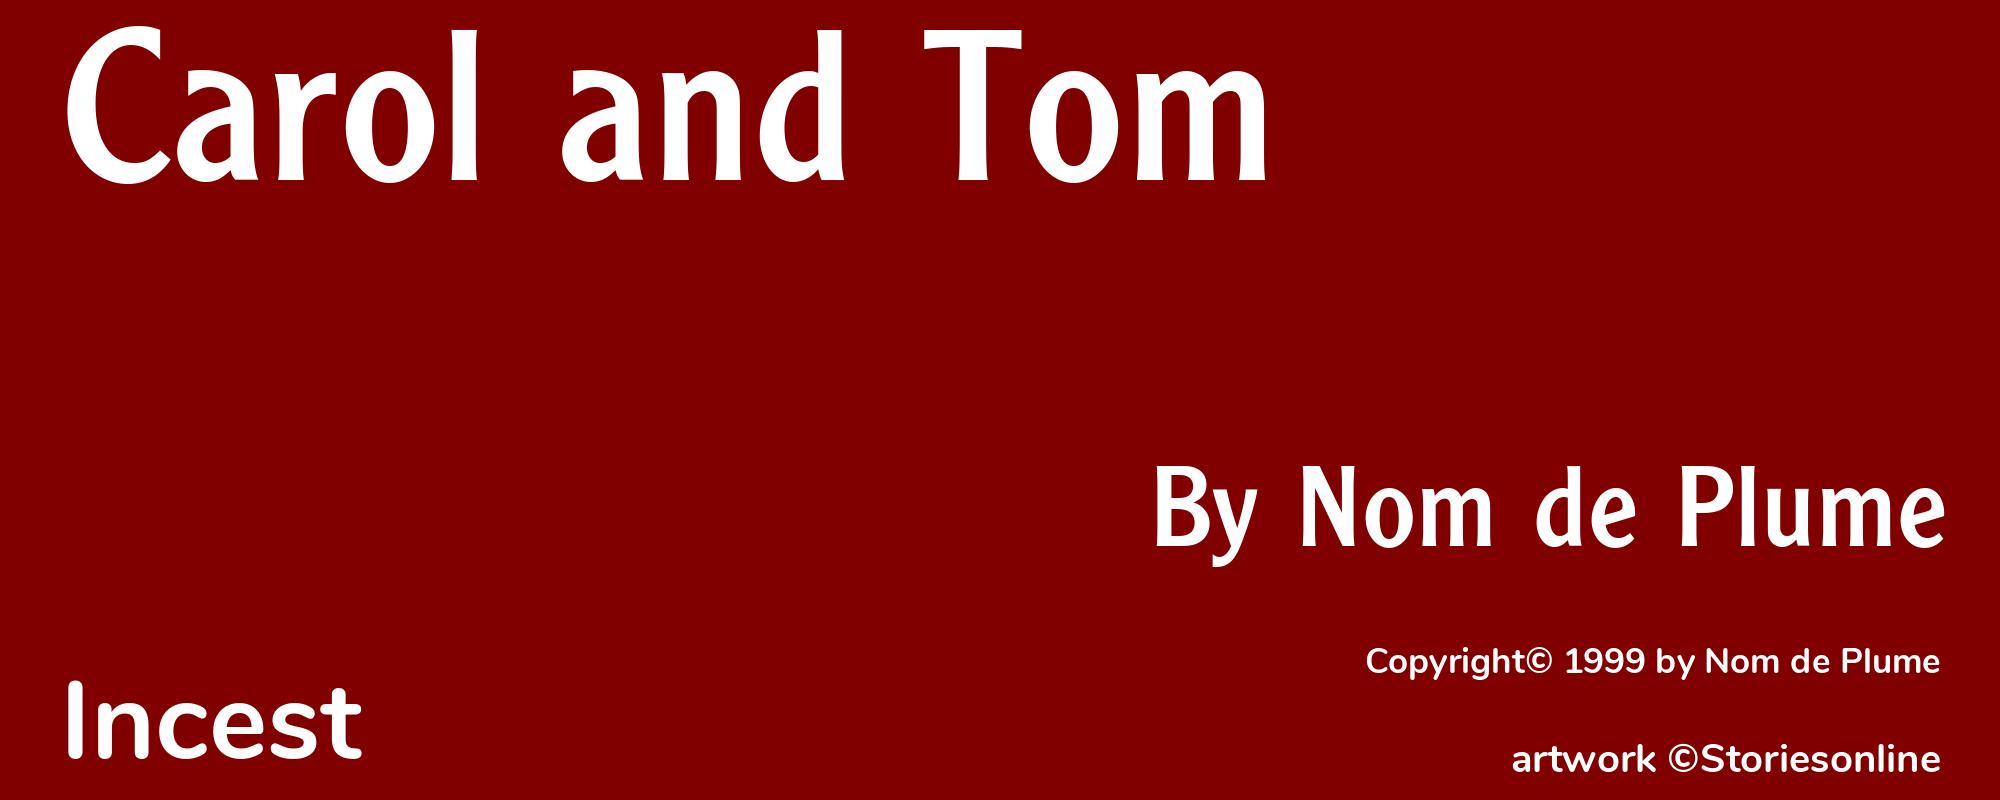 Carol and Tom - Cover